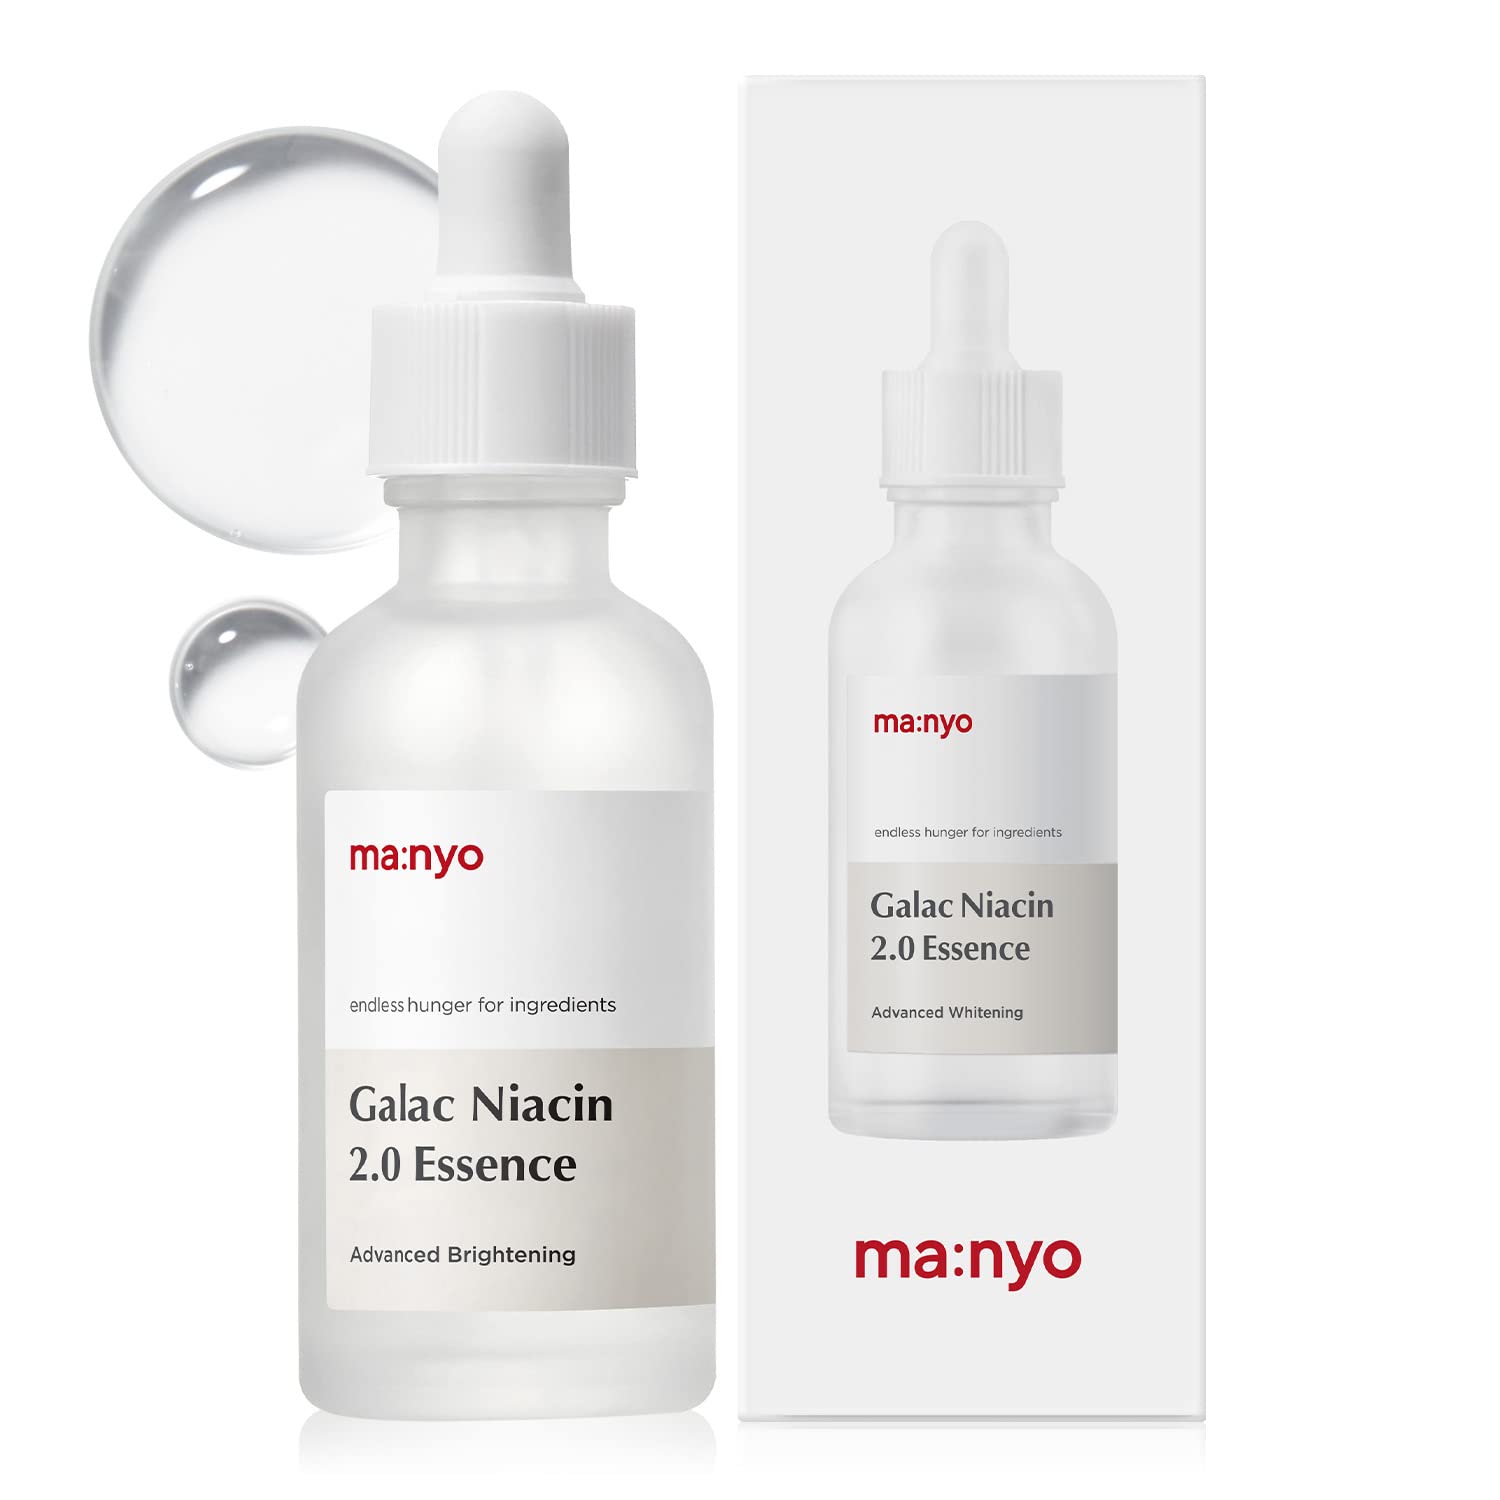 ma:nyo Galac Niacin 2.0 Essence Korean Facial Serum, Ultra Hydrating, Tone Balancing, Niancinamide, for Women and Men Korean Skin care 1.69   (50)